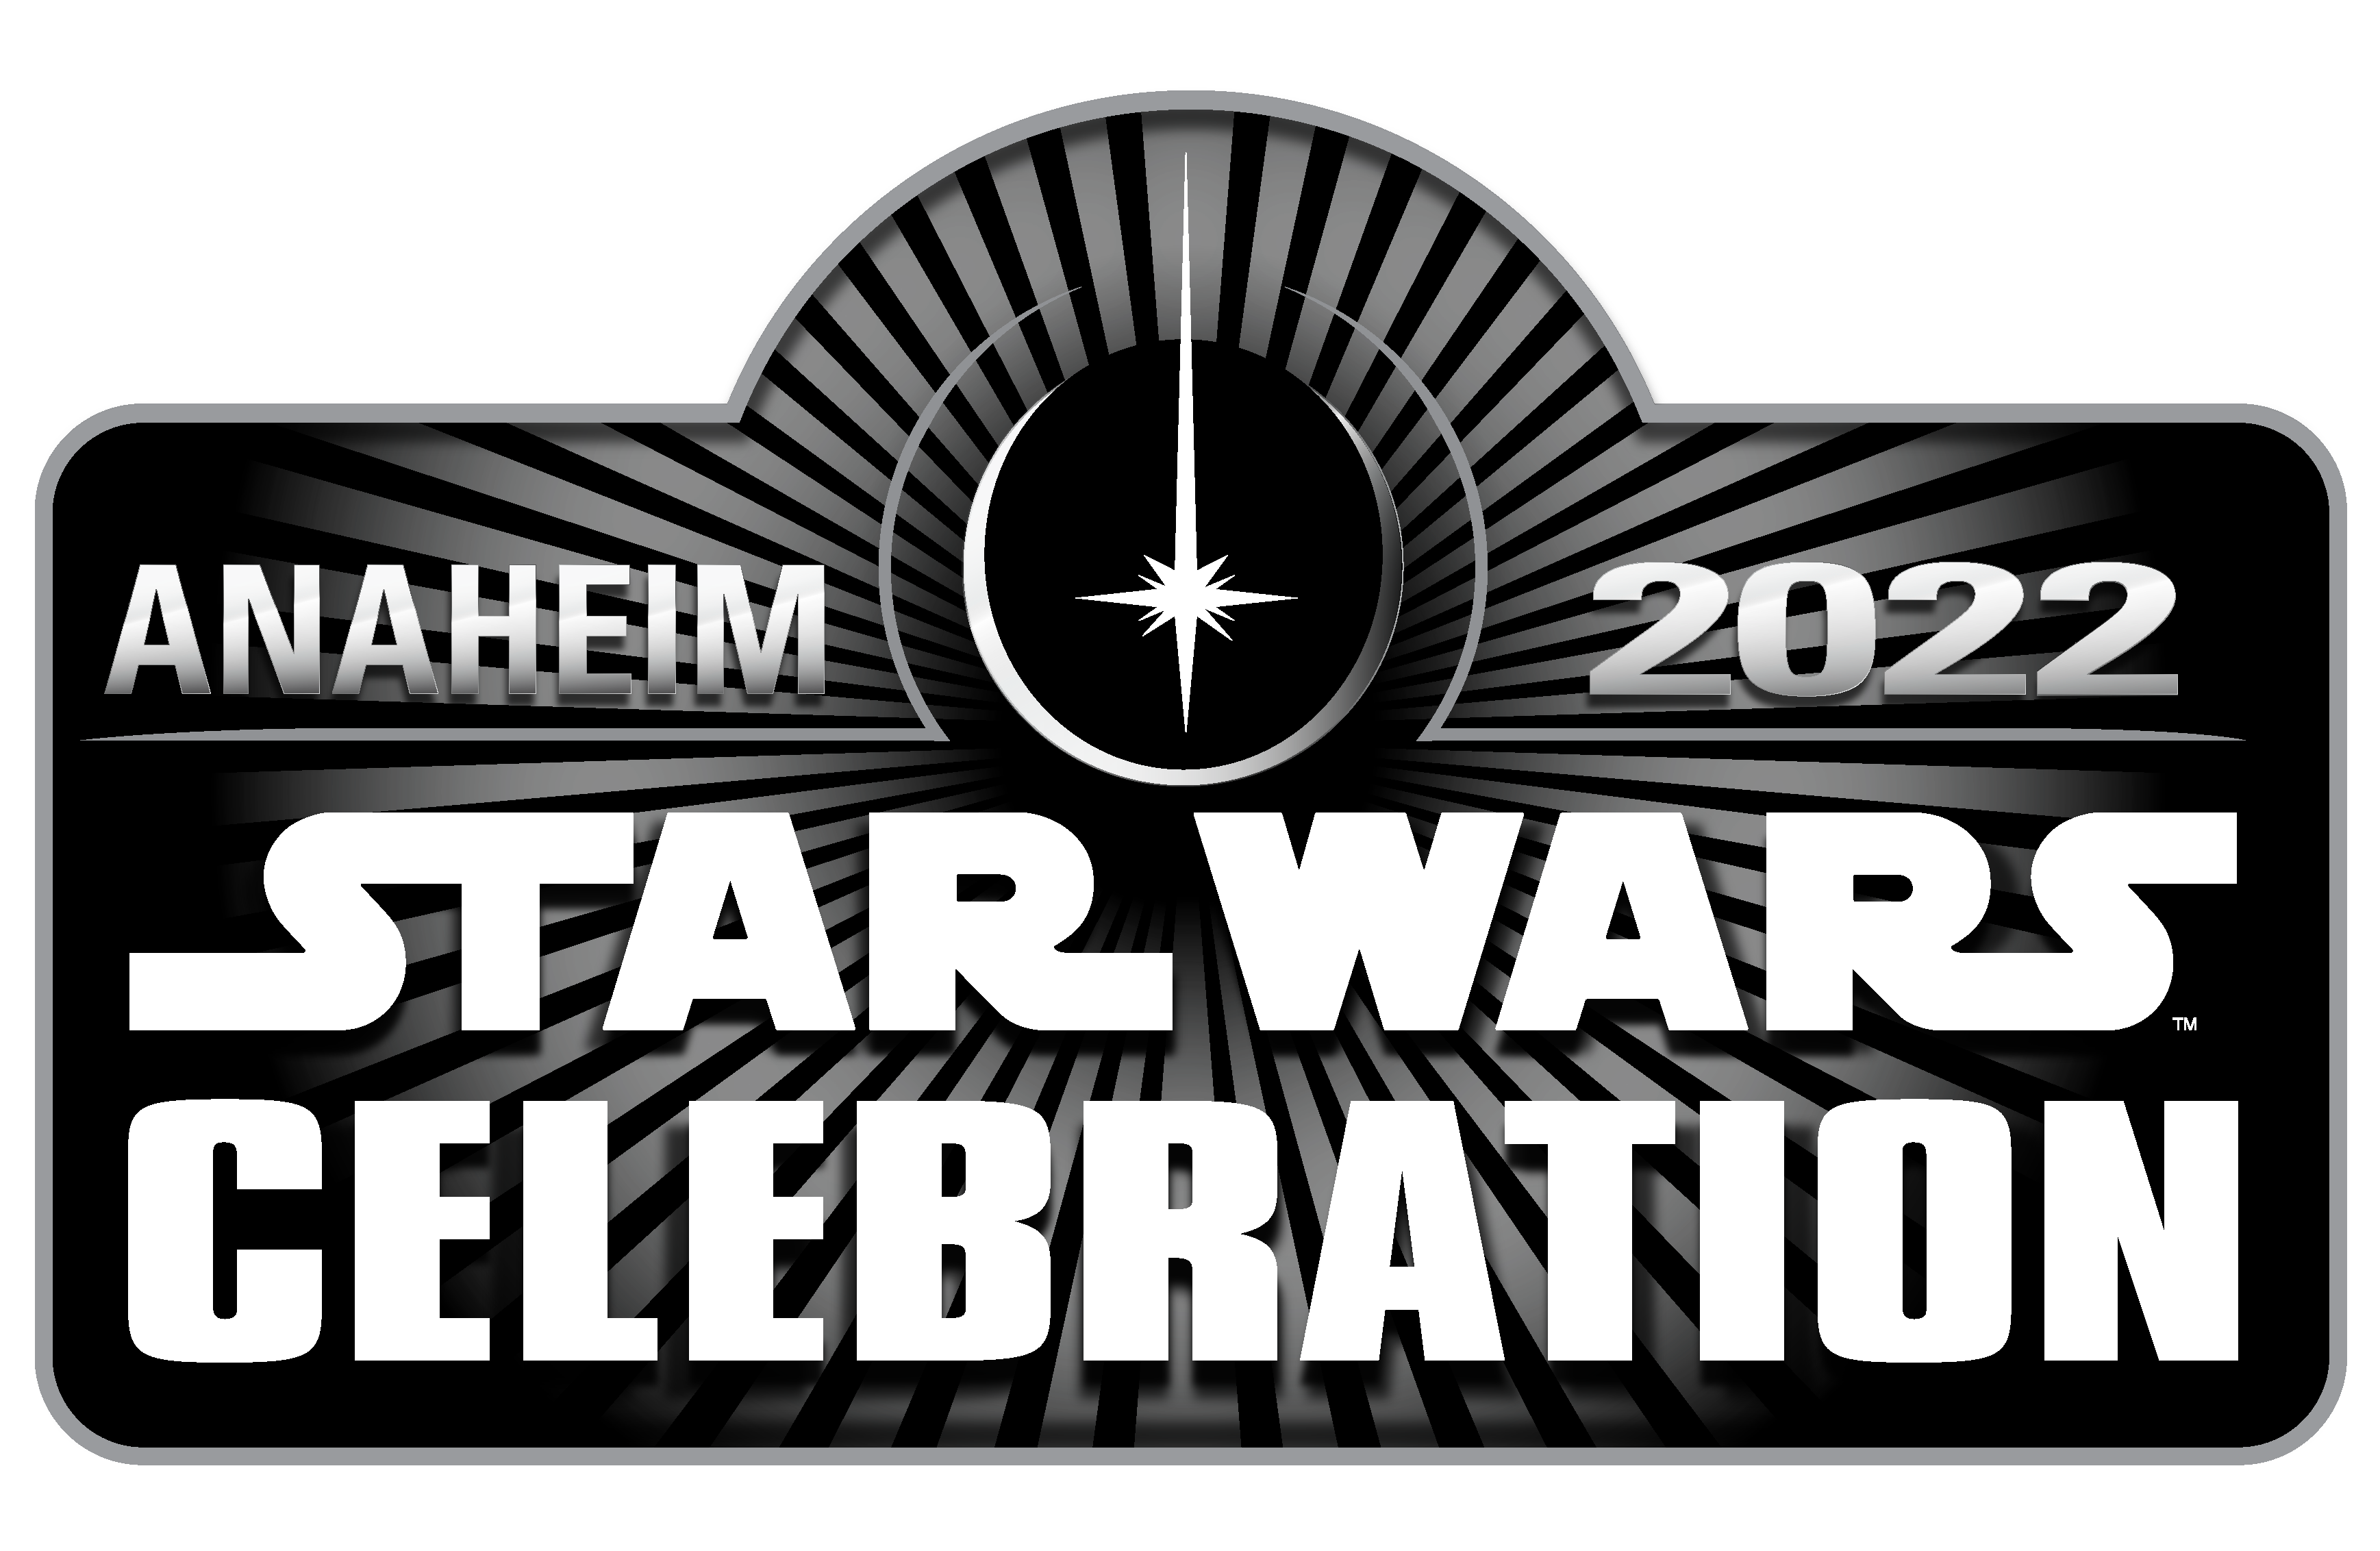 Star Wars Celebration logo